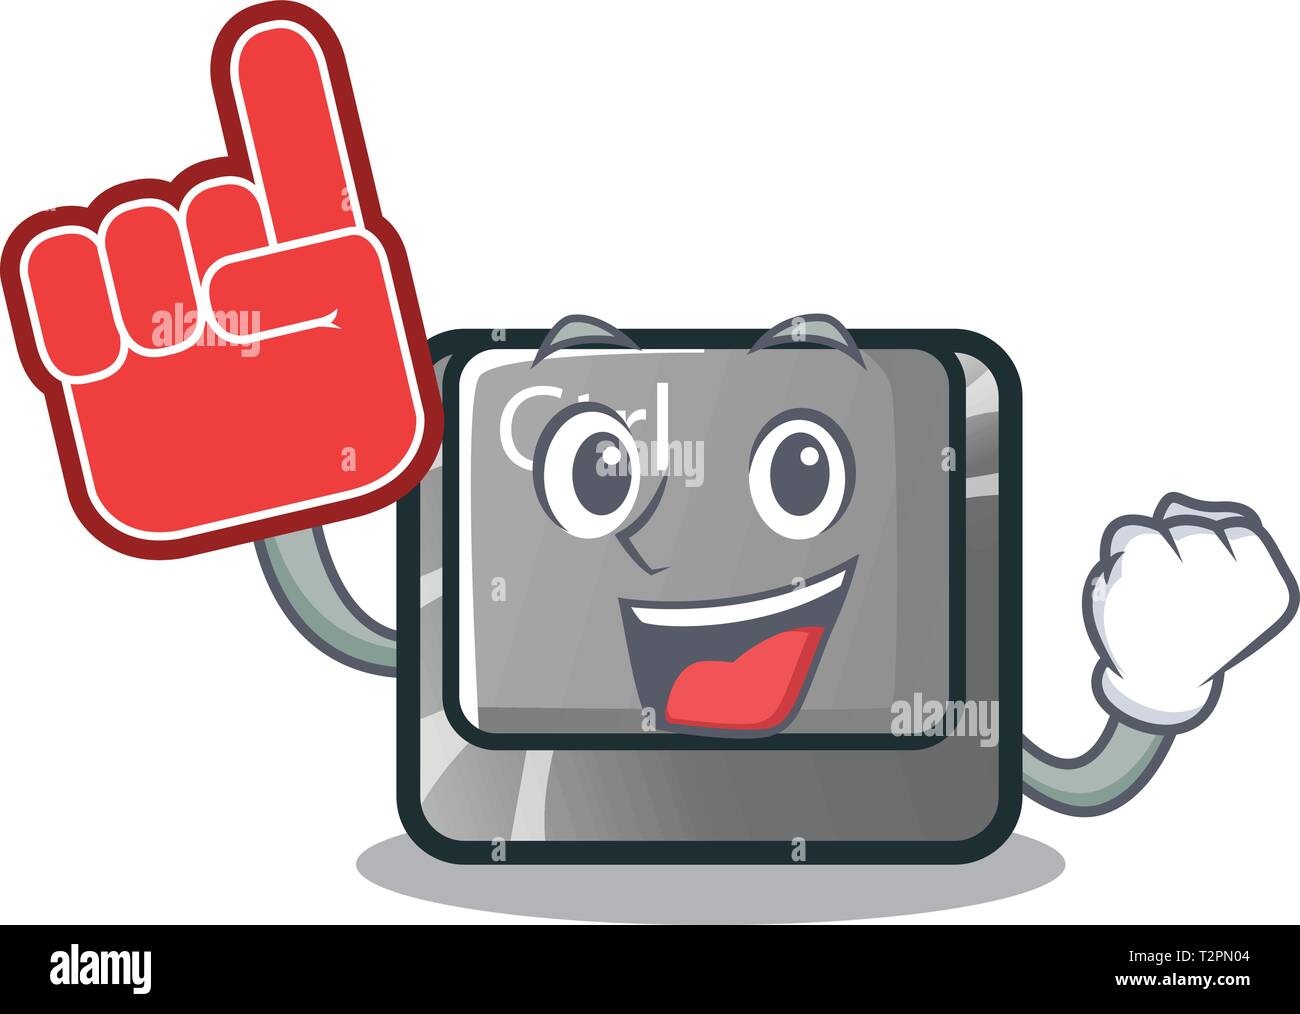 Foam finger ctrl button on the cartoon keyboard vectoir illustration Stock Vector